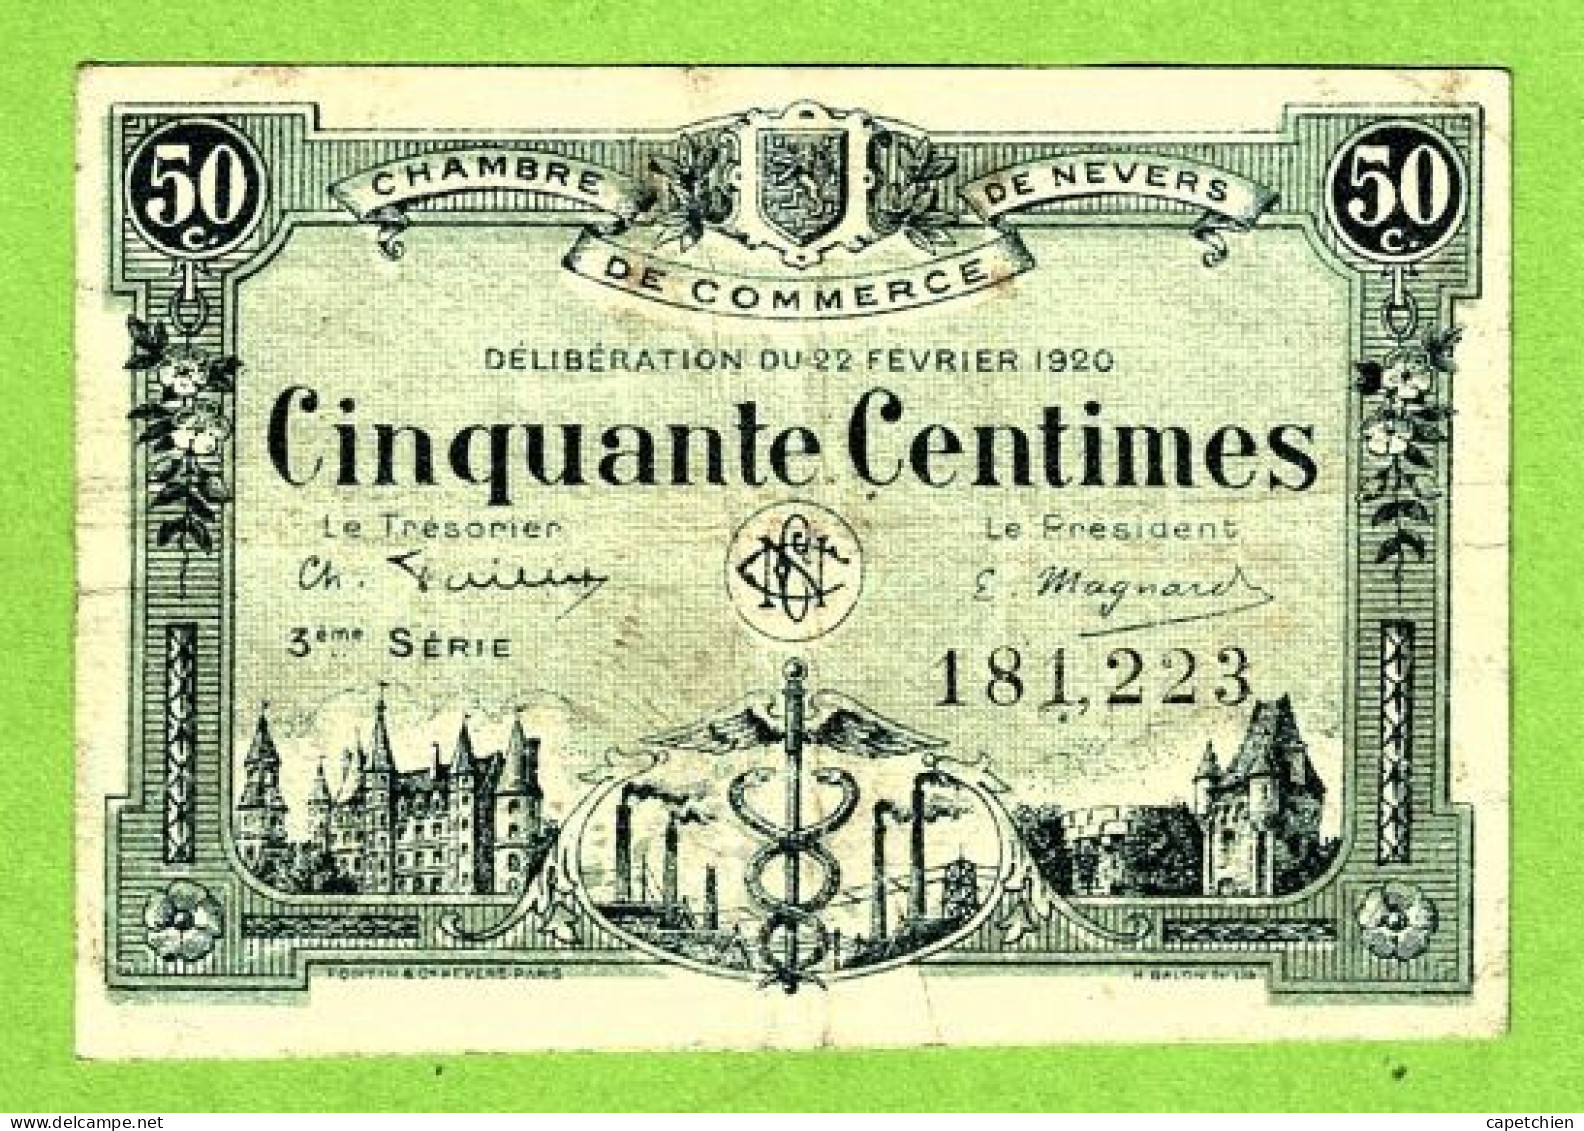 FRANCE /  CHAMBRE De COMMERCE De NEVERS / 50 CENTIMES / 22 FEVRIER 1920  N° 181,223 / 3 ème SERIE - Handelskammer